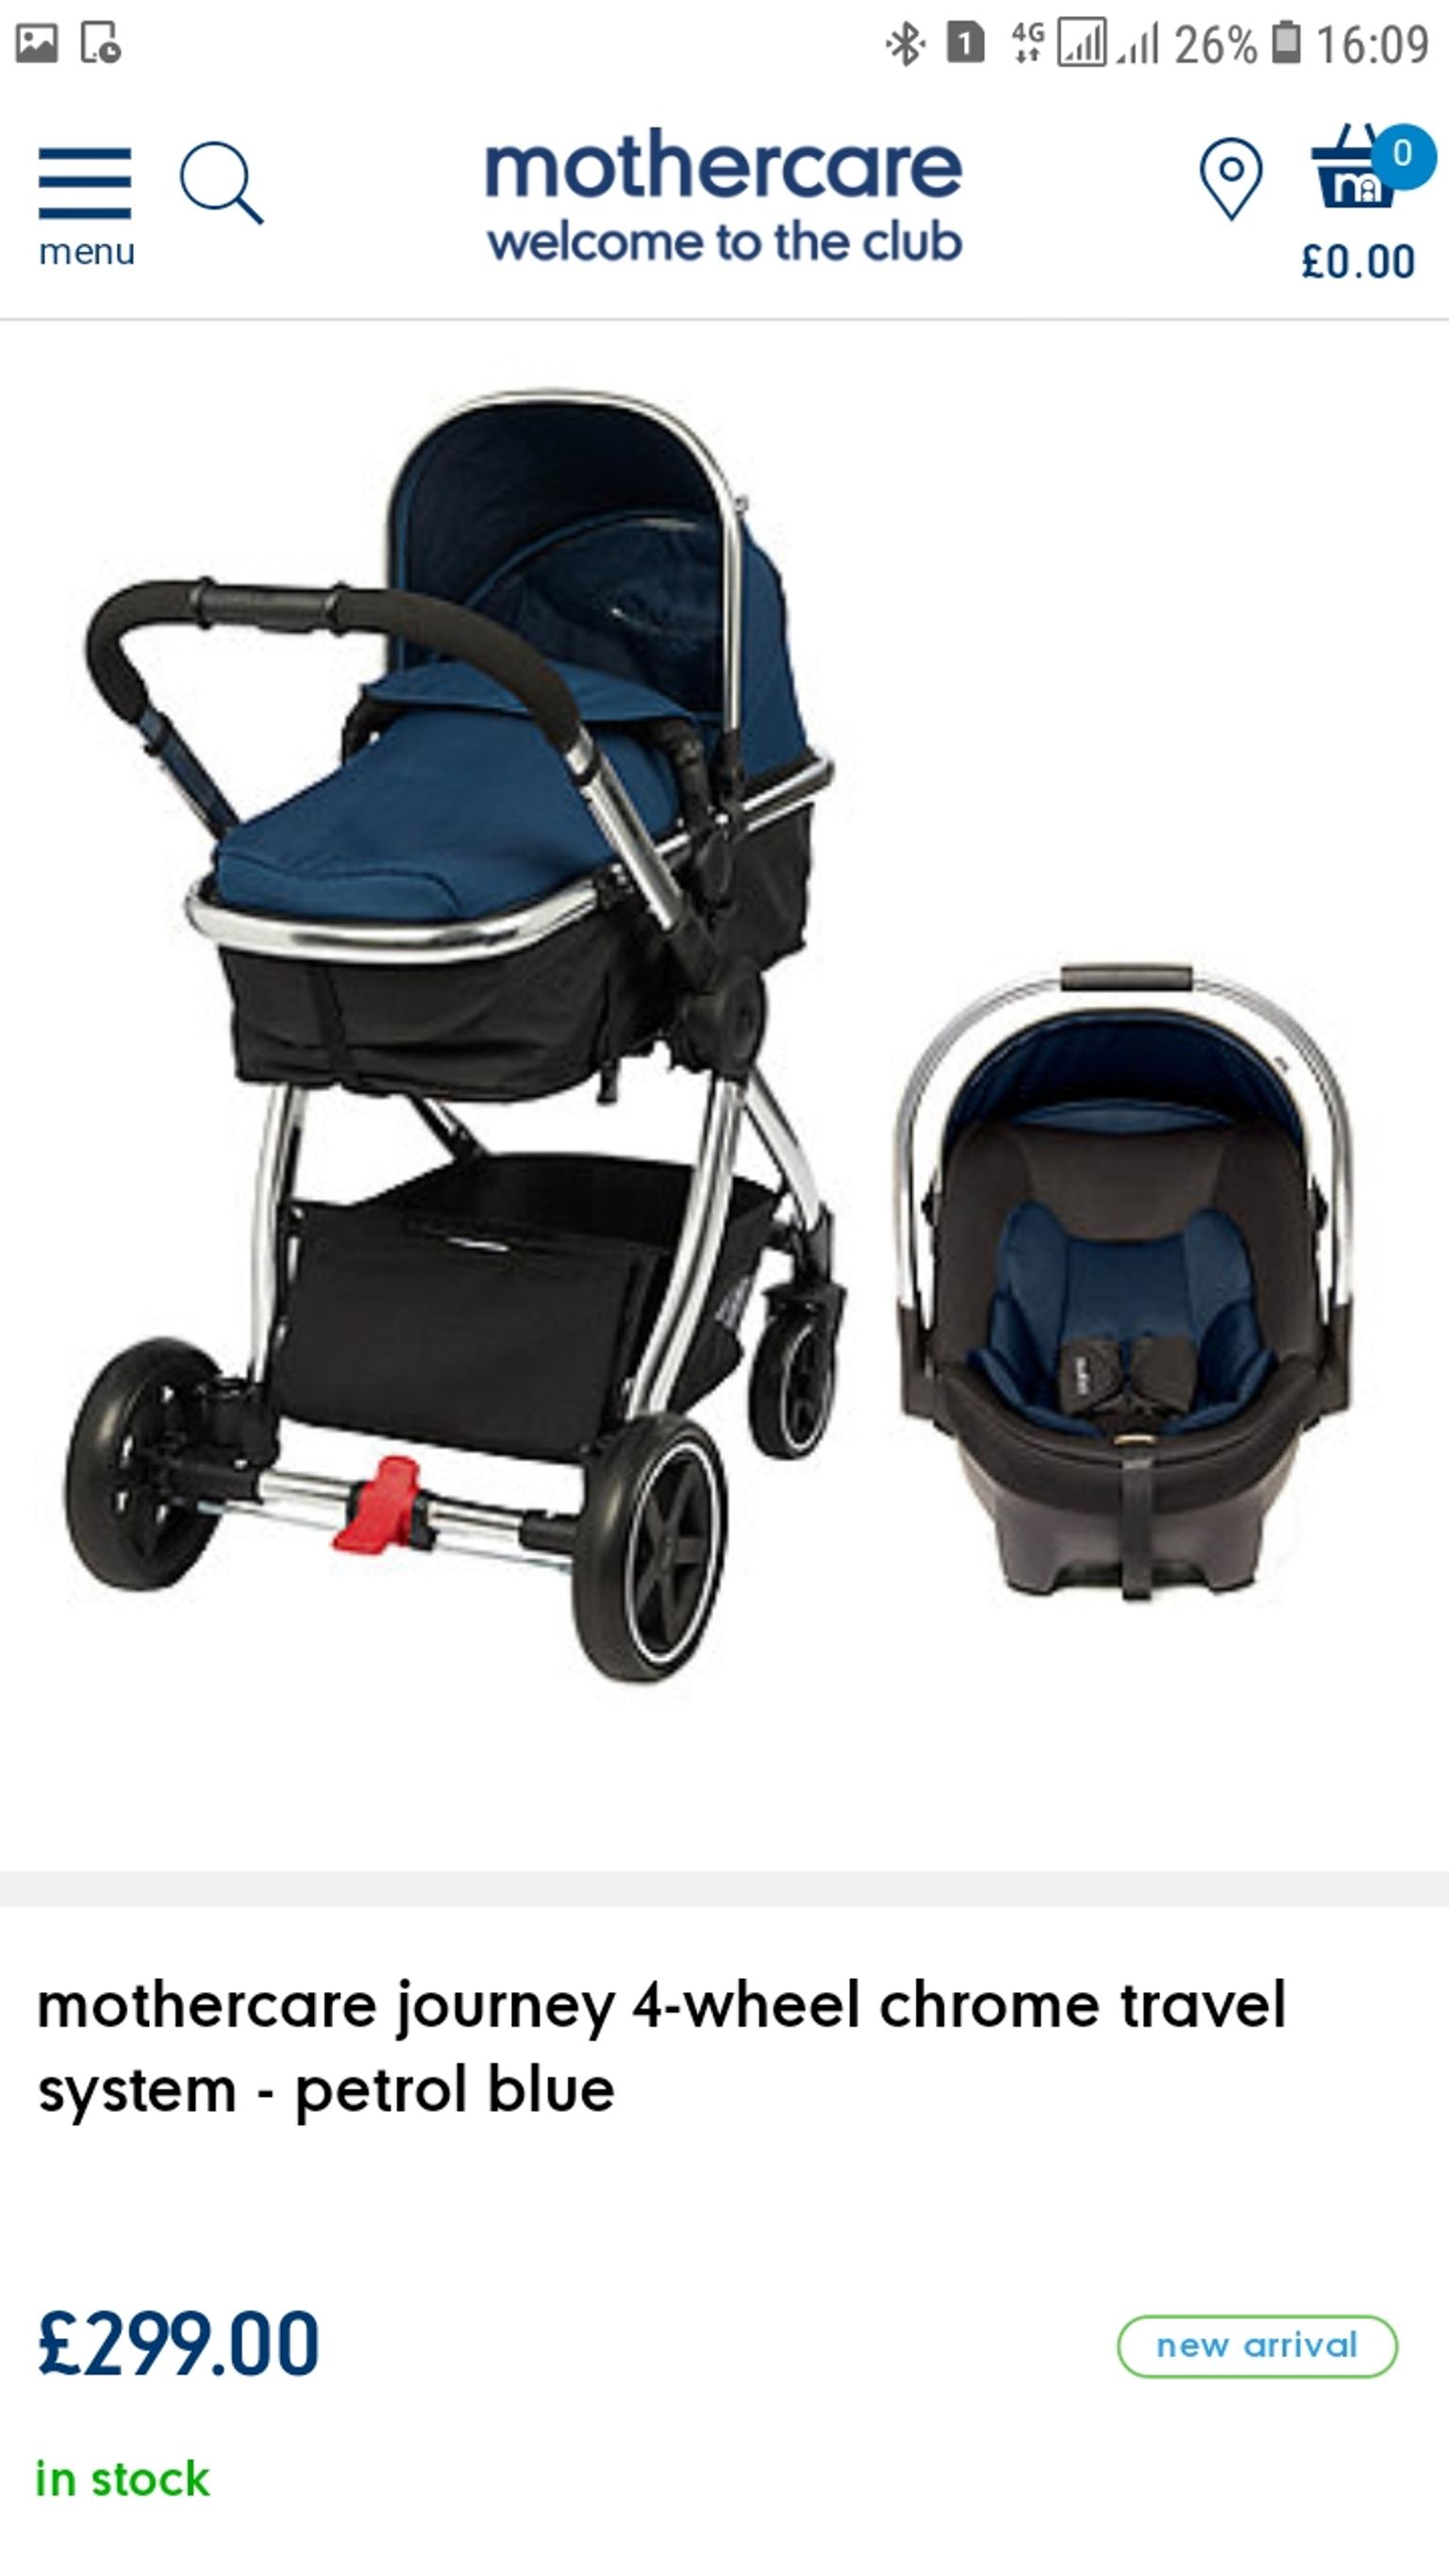 mothercare journey petrol blue